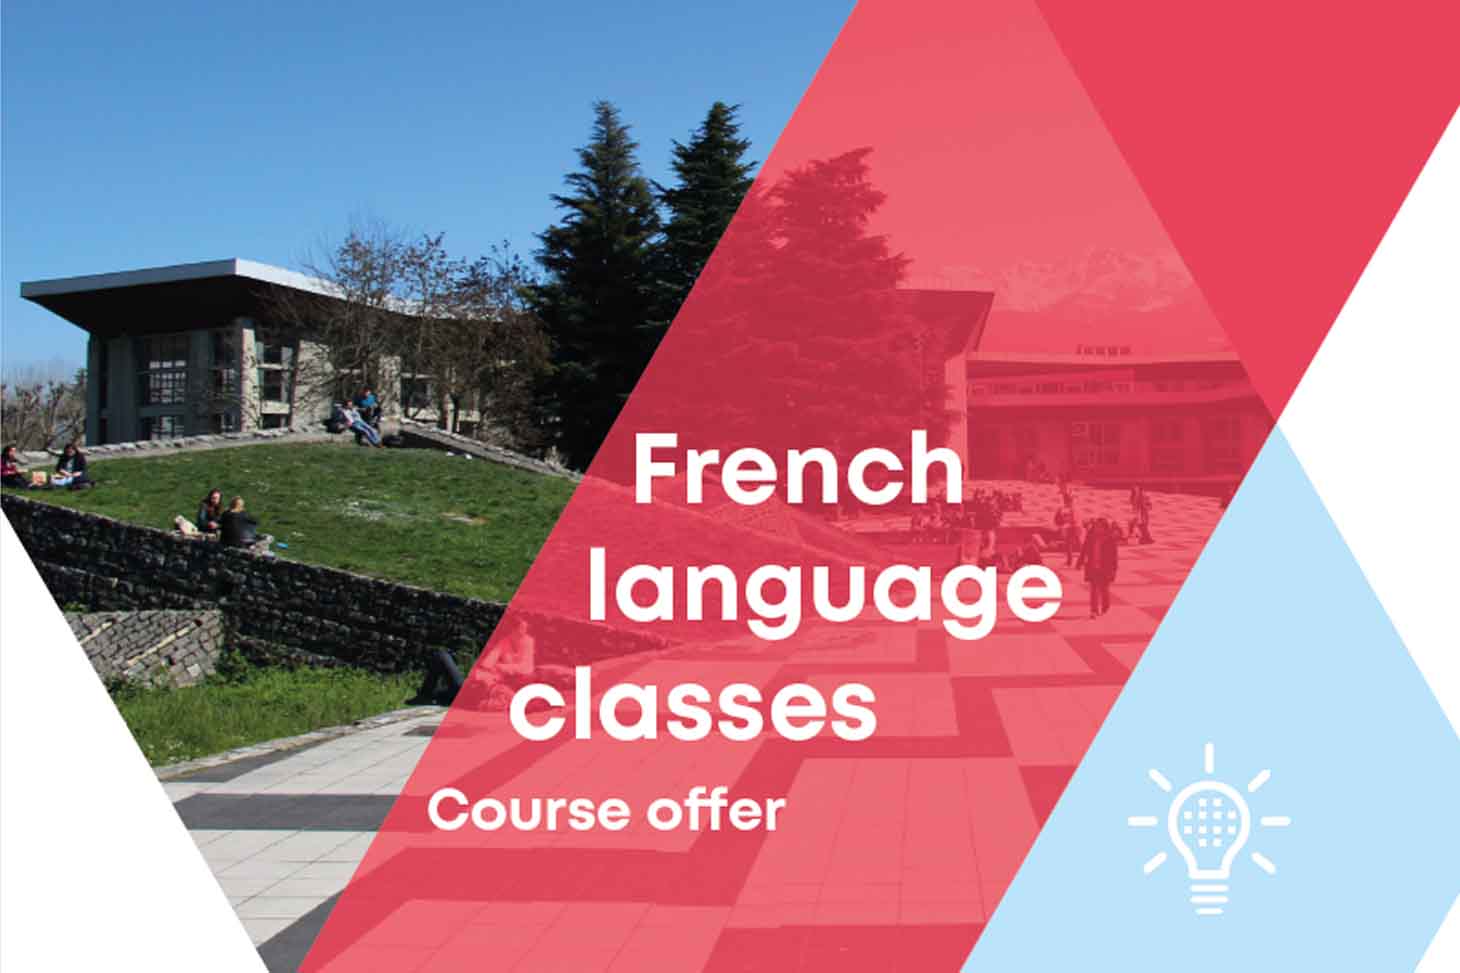 French language classes